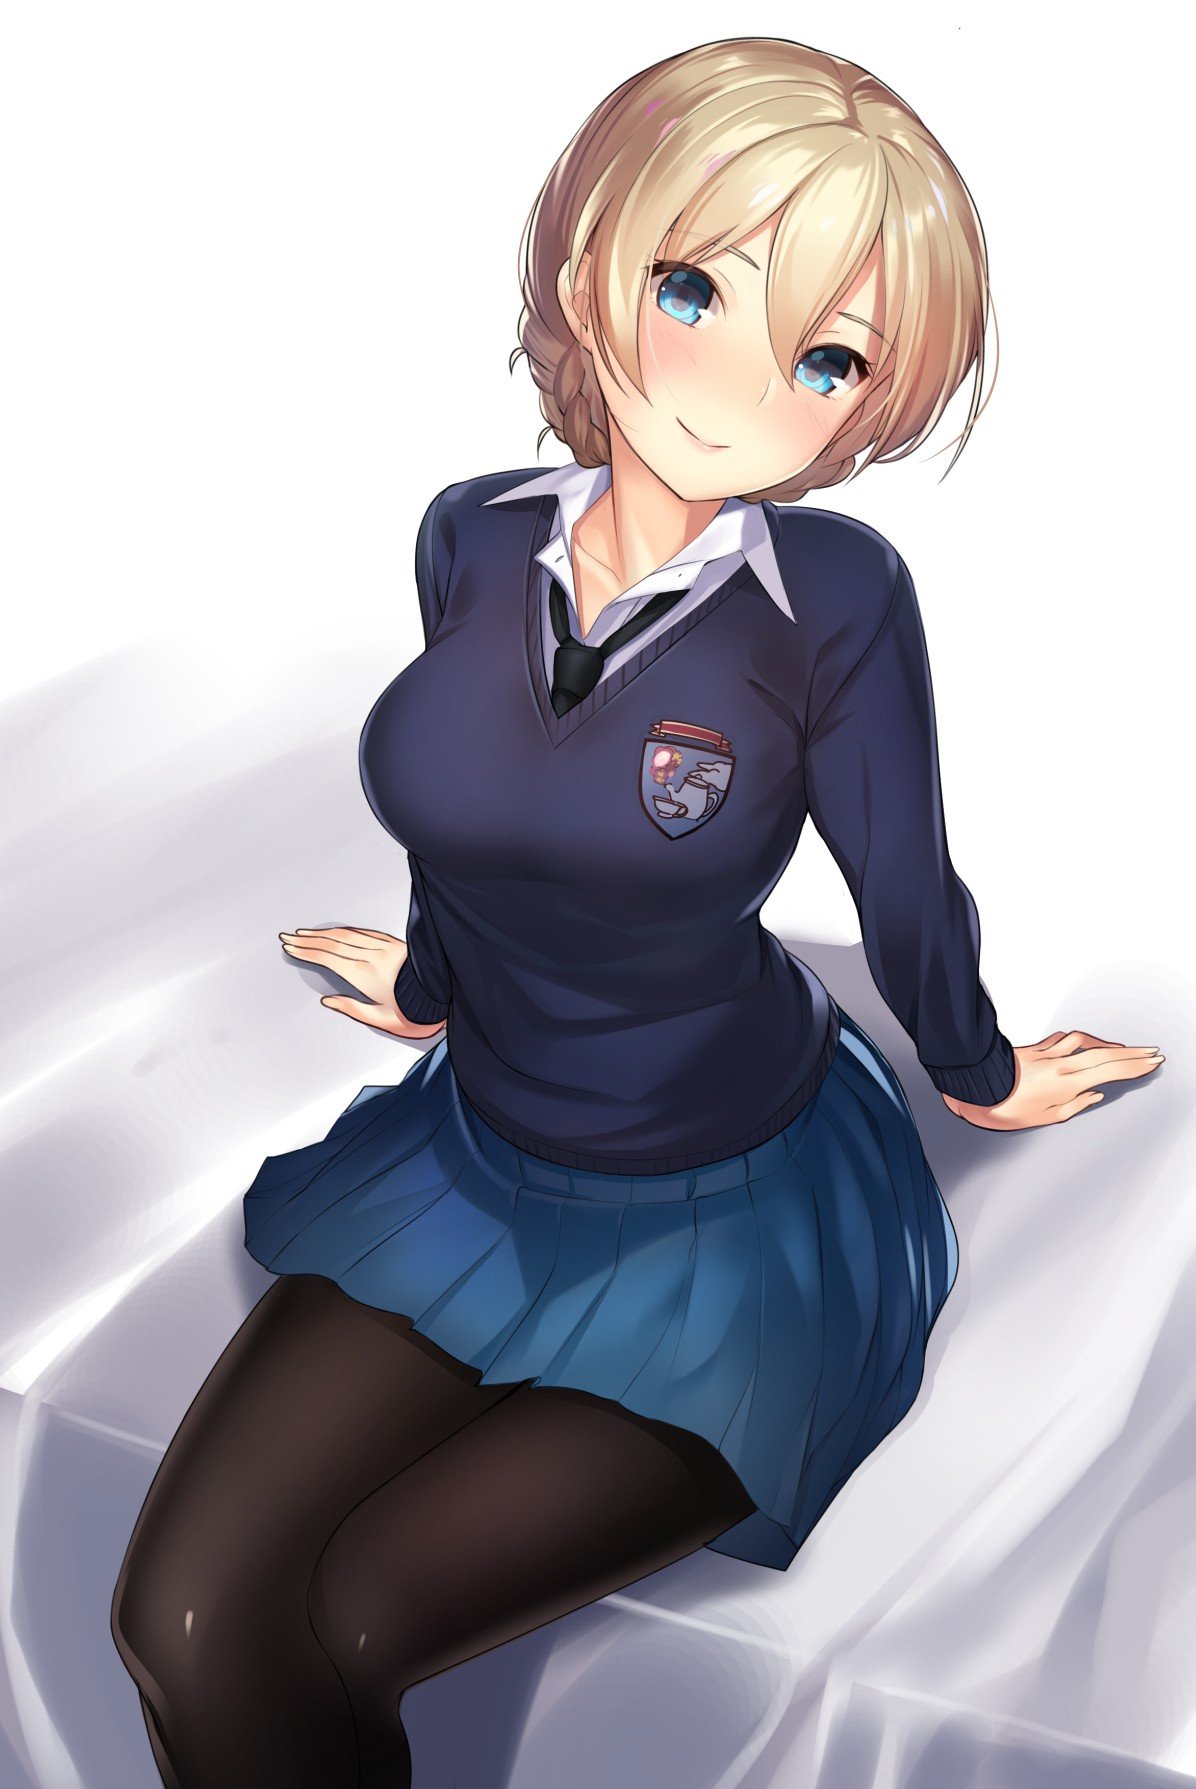 short wallpaper,cartoon,anime,long hair,sitting,uniform